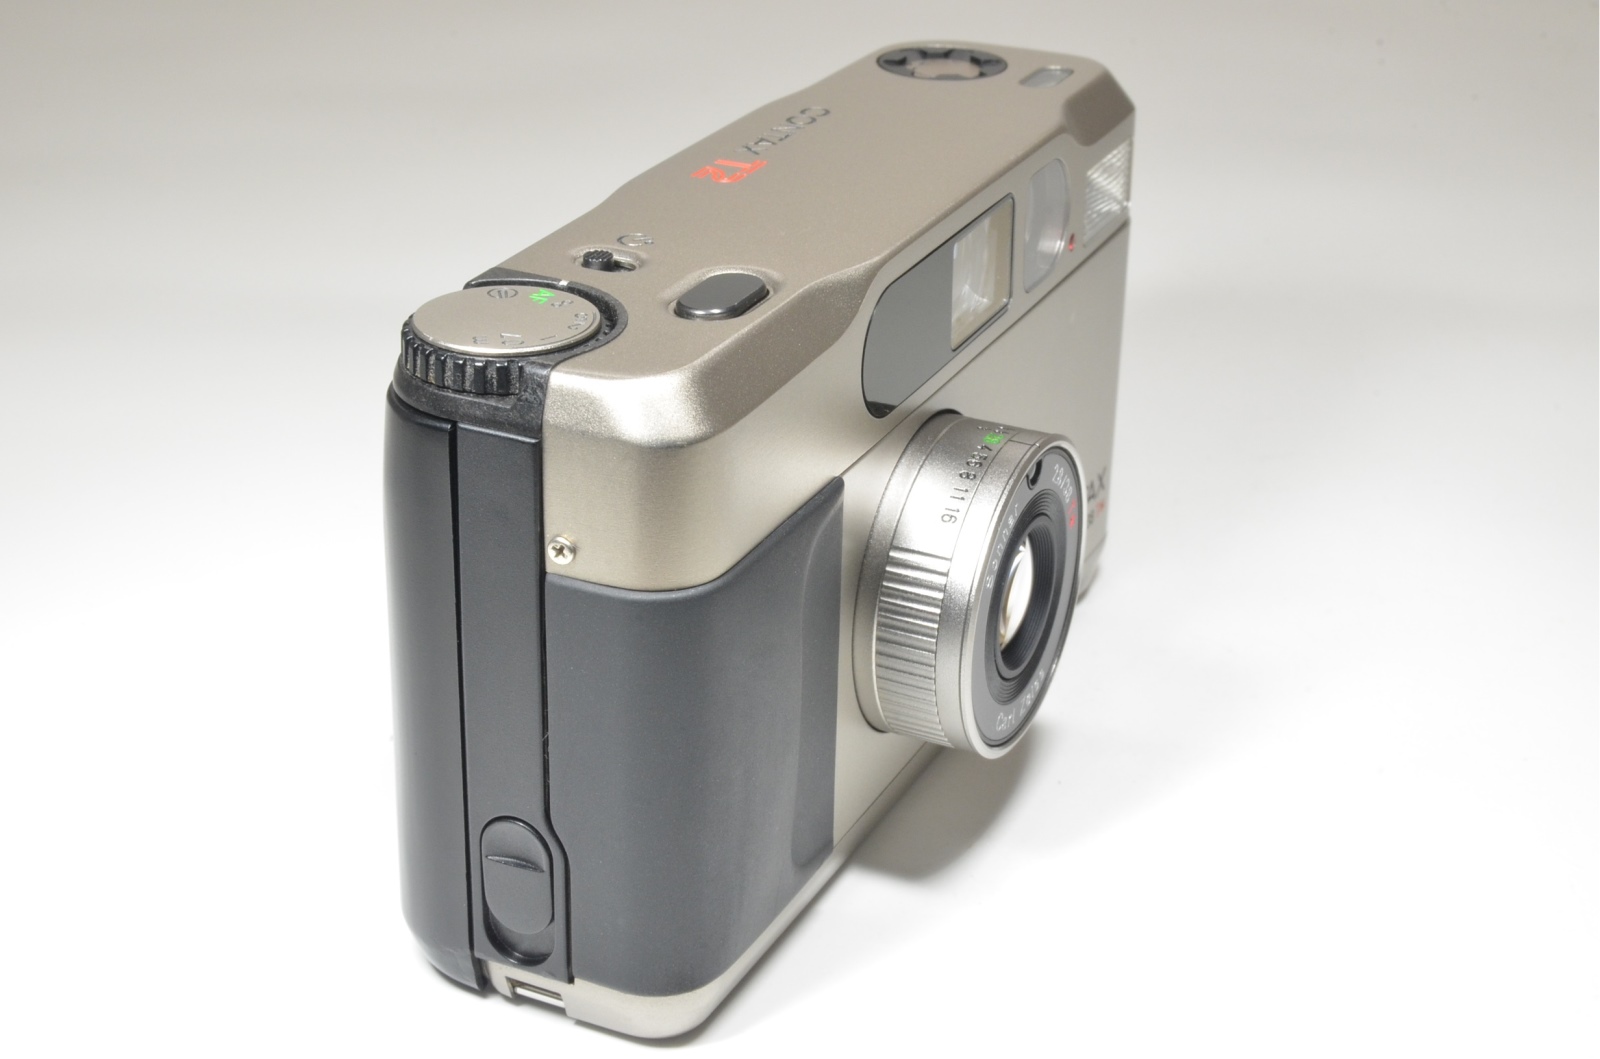 contax t2 data back titanium silver p&s 35mm film camera